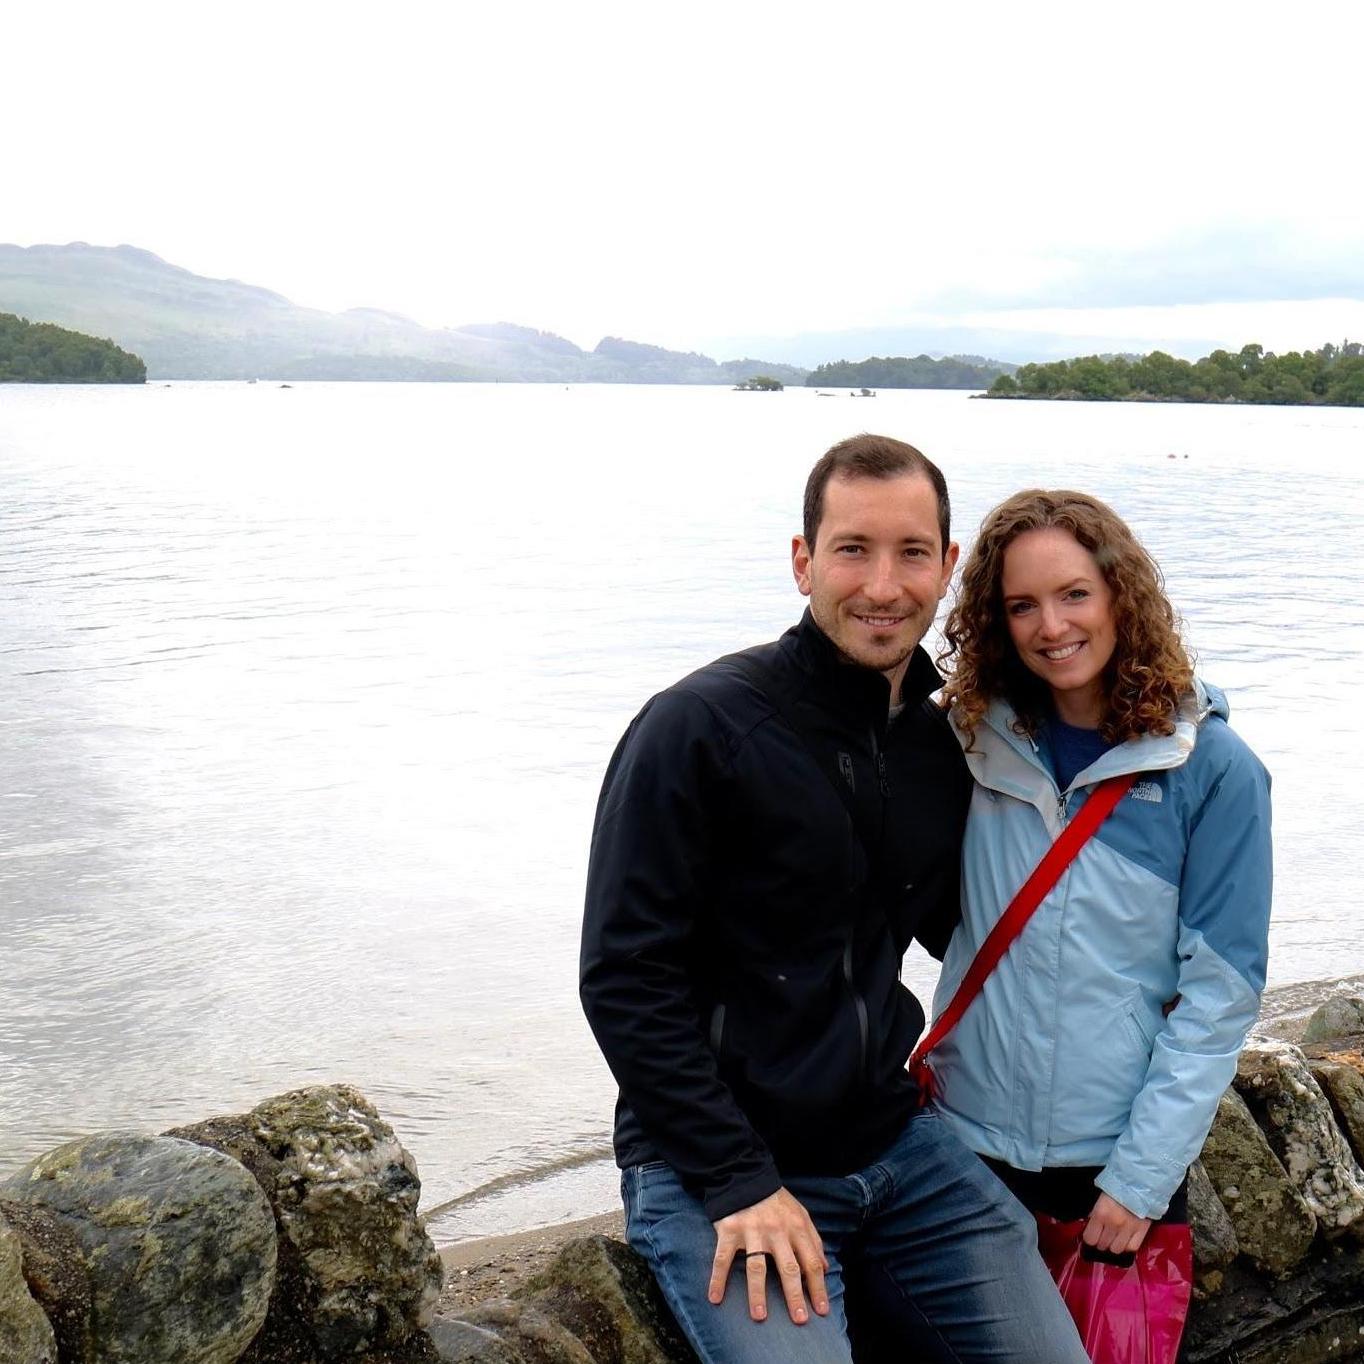 Loch Lomond, the birthplace of Lydia's ancestors, Clan Buchanan, in Scotland.